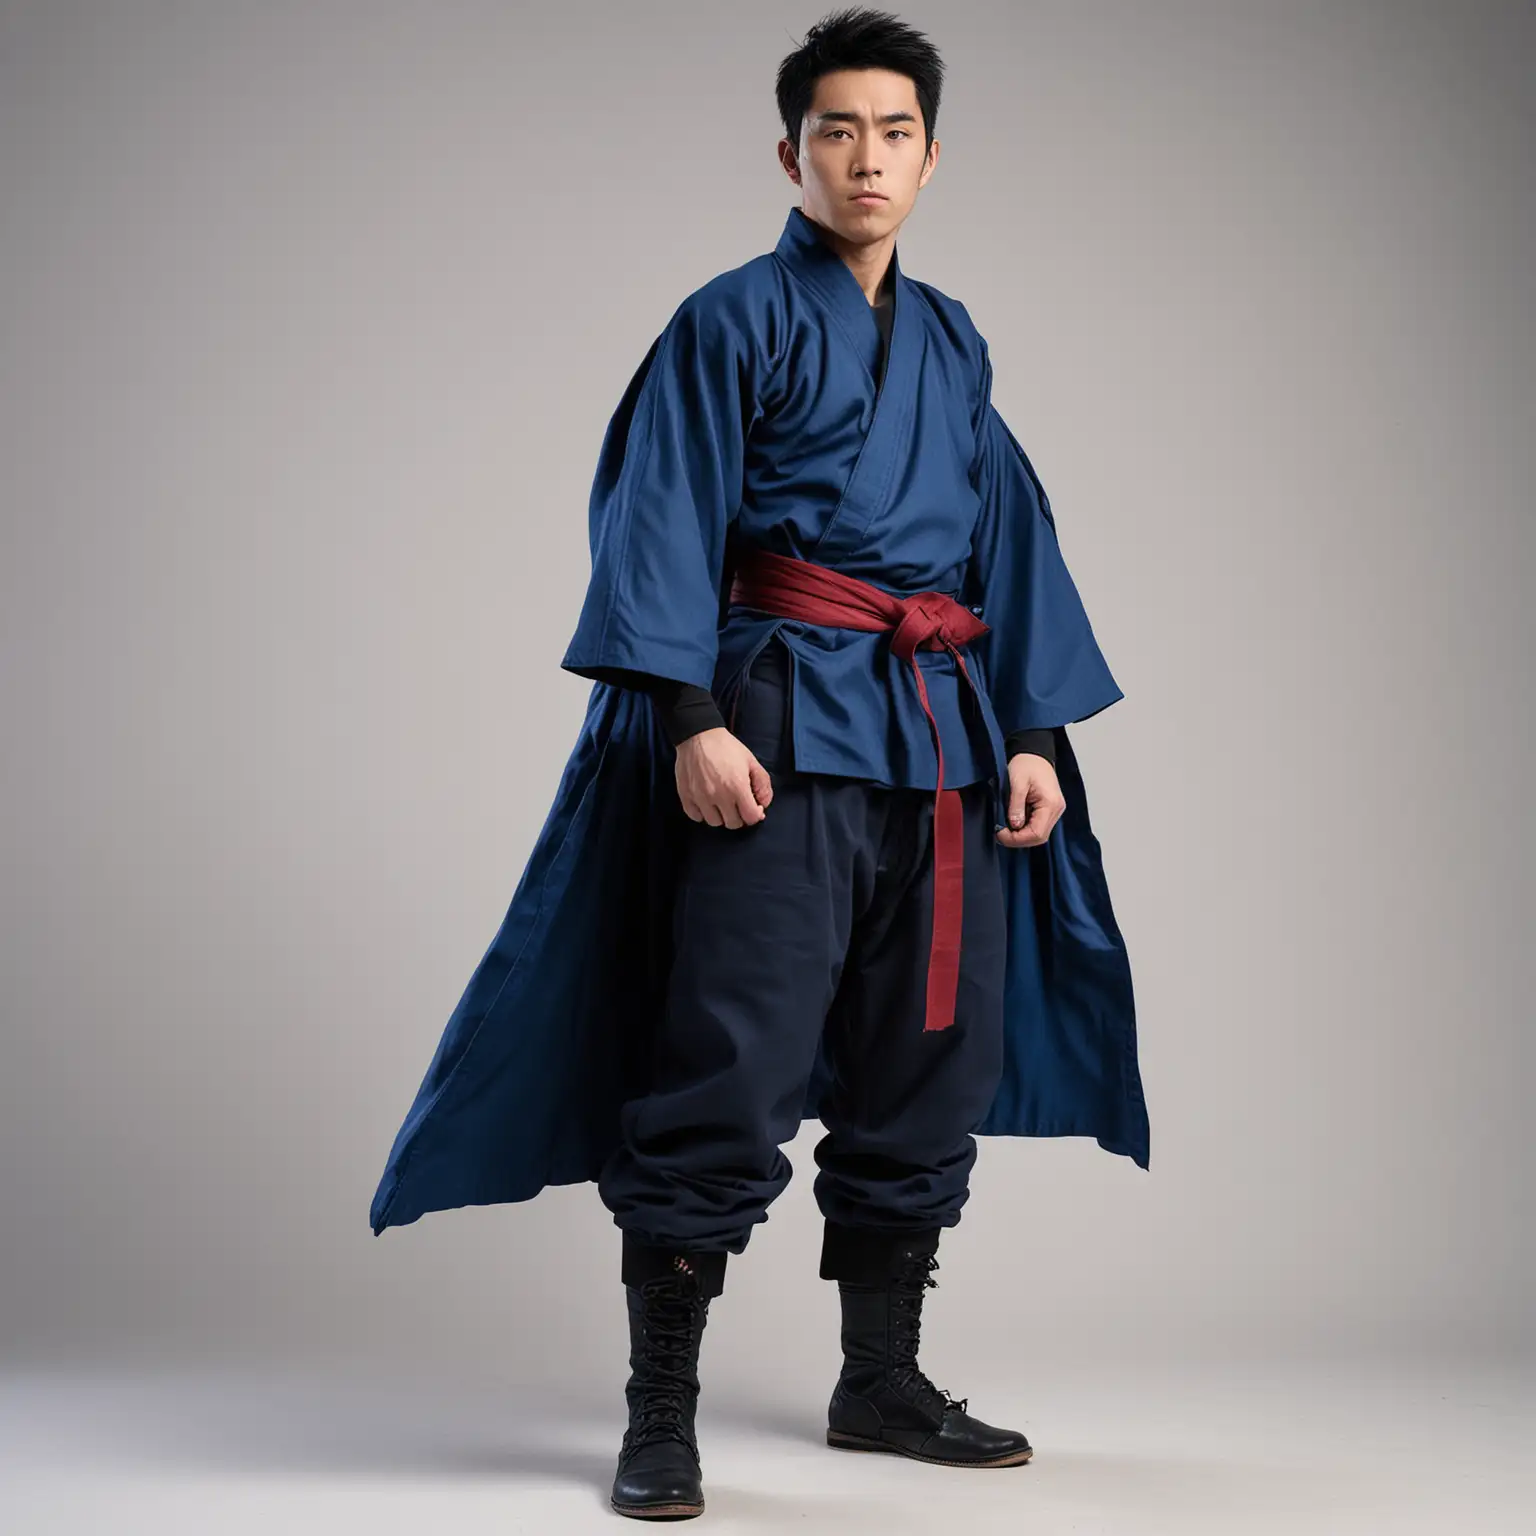 Heroic Japanese Karate Cosplayer in Saturated Dark Blue Attire